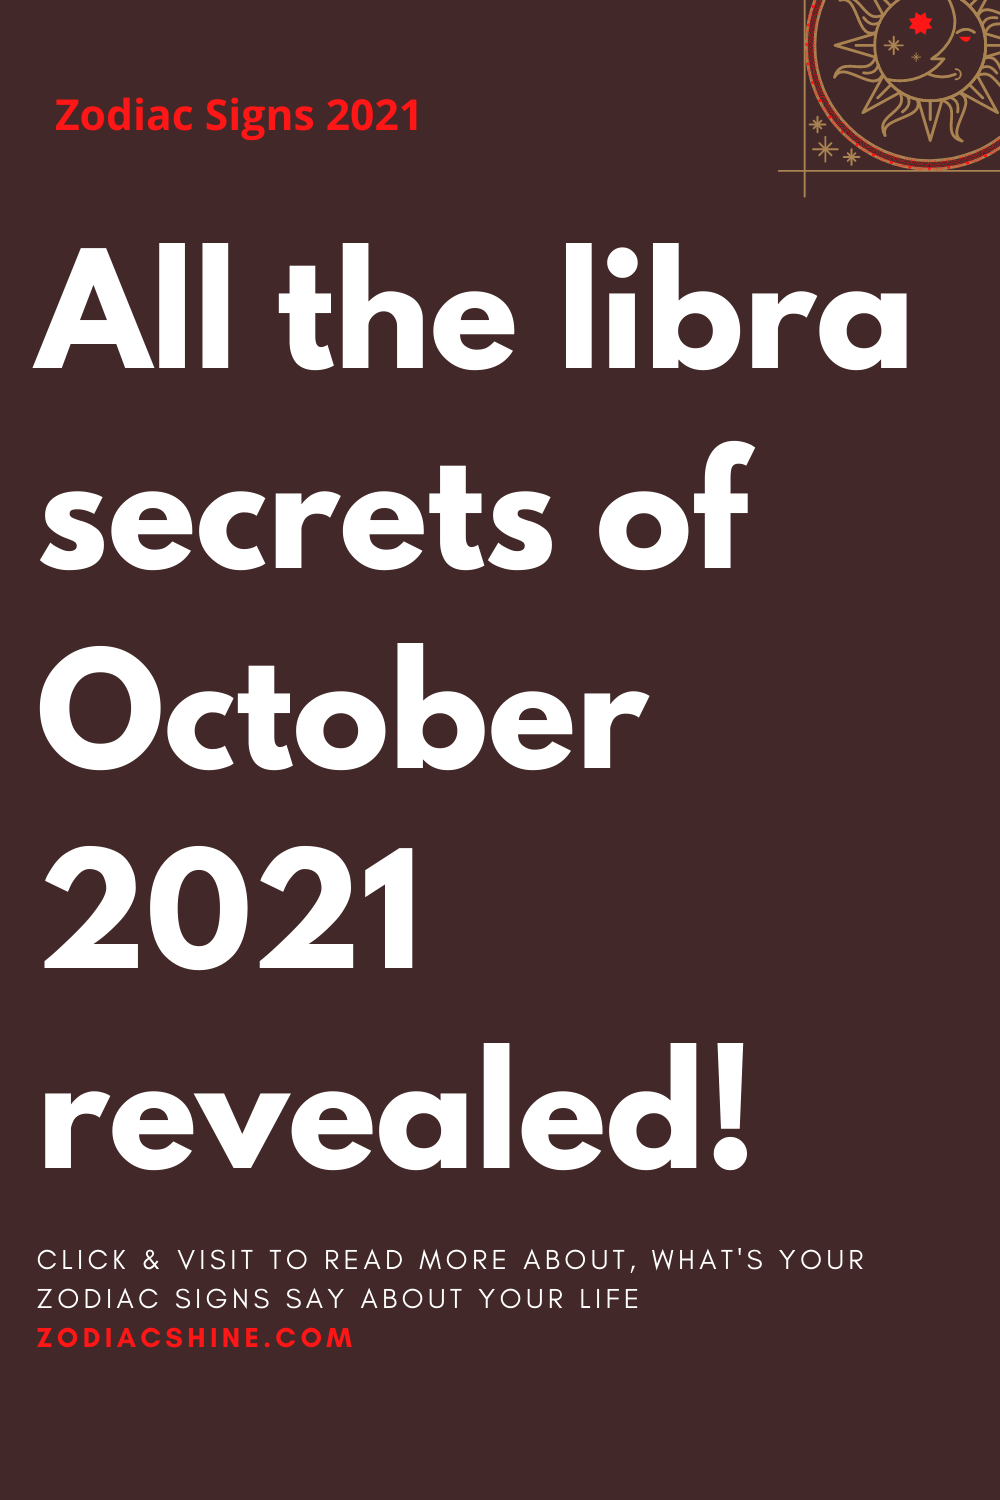 All the libra secrets of October 2021 revealed!